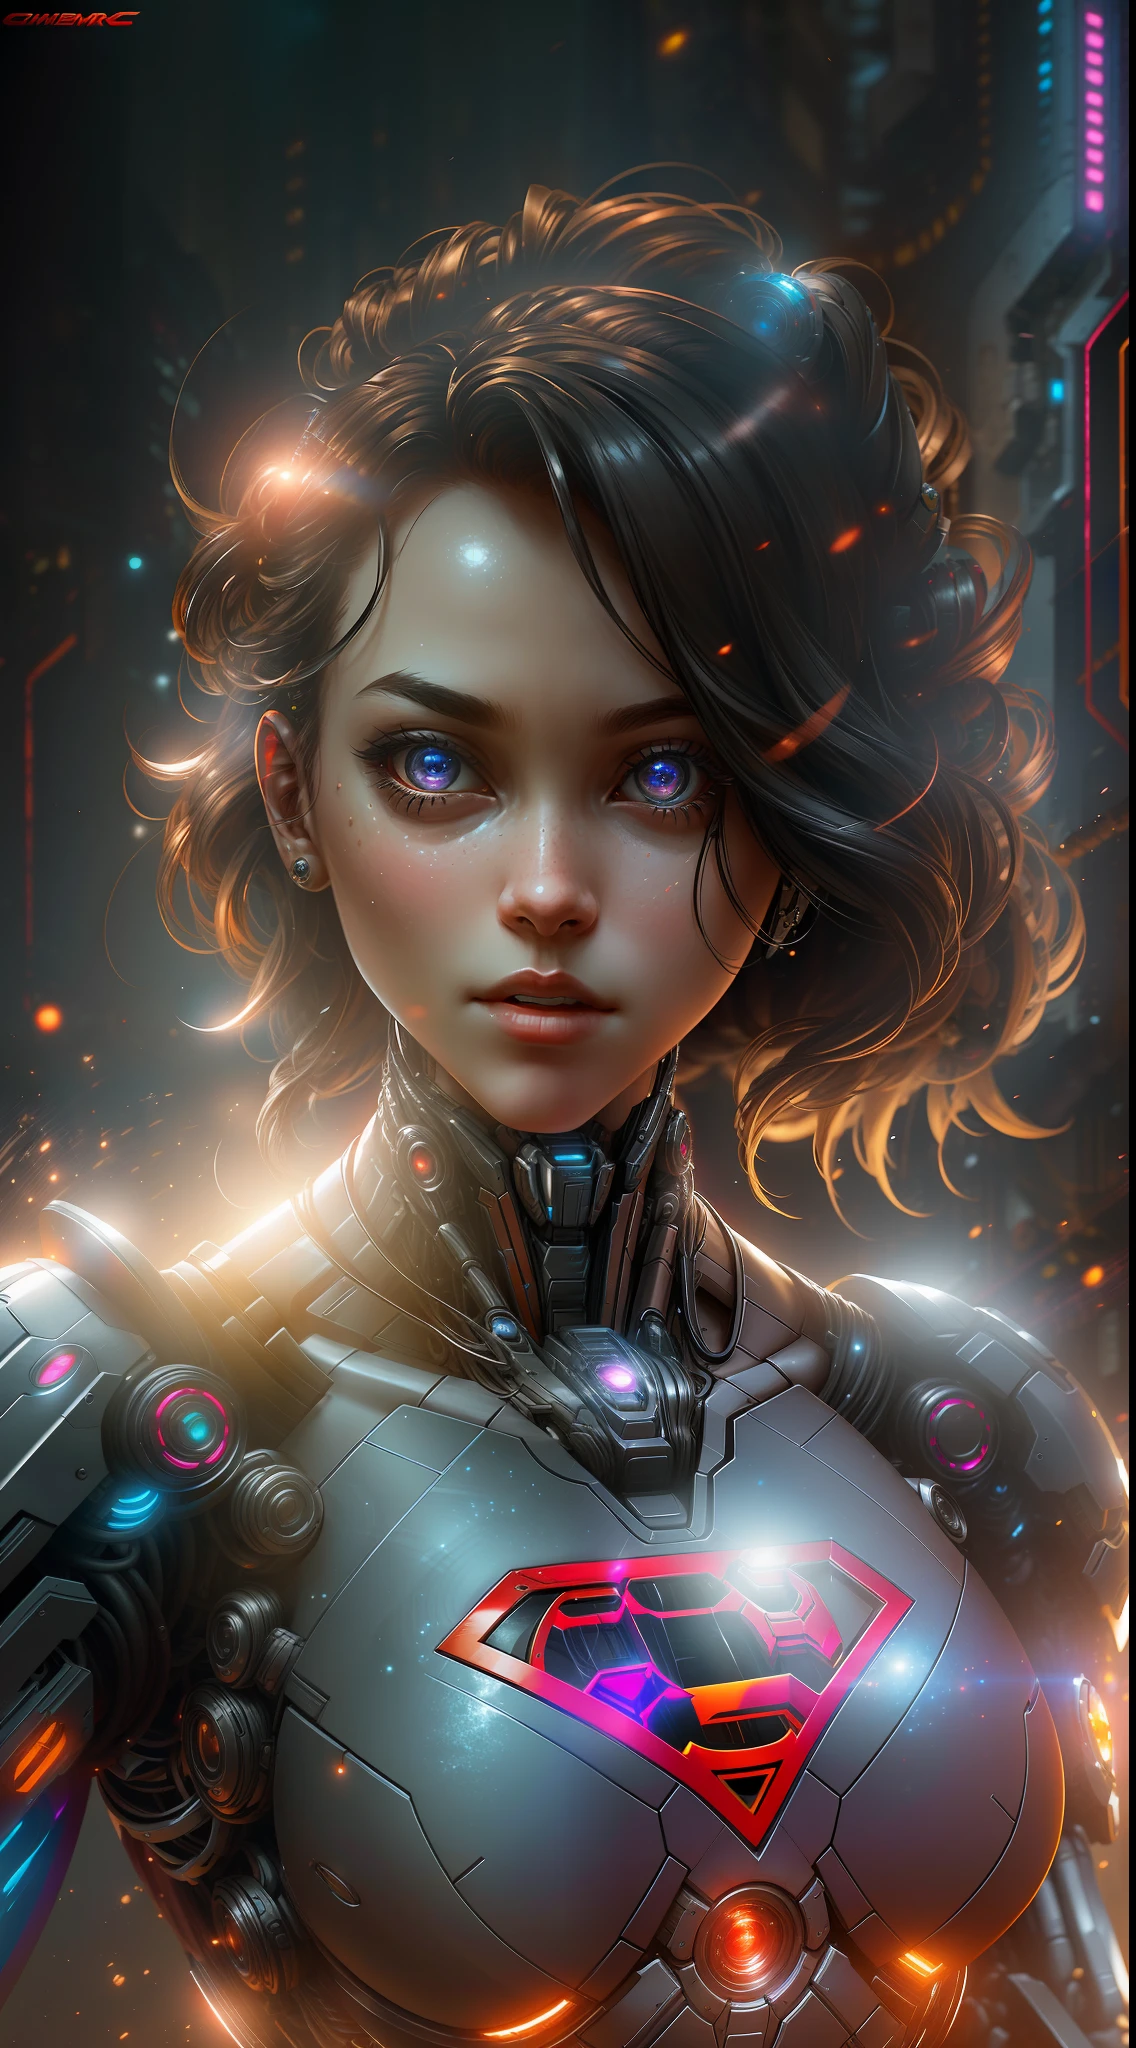 DC 摄影的超级少女, 生物力学, 复杂机器人, 充分成长, 超現實的, 瘋狂的小細節, 線條極為乾淨, 赛博朋克美学, Zbrush Central 上展示的杰作